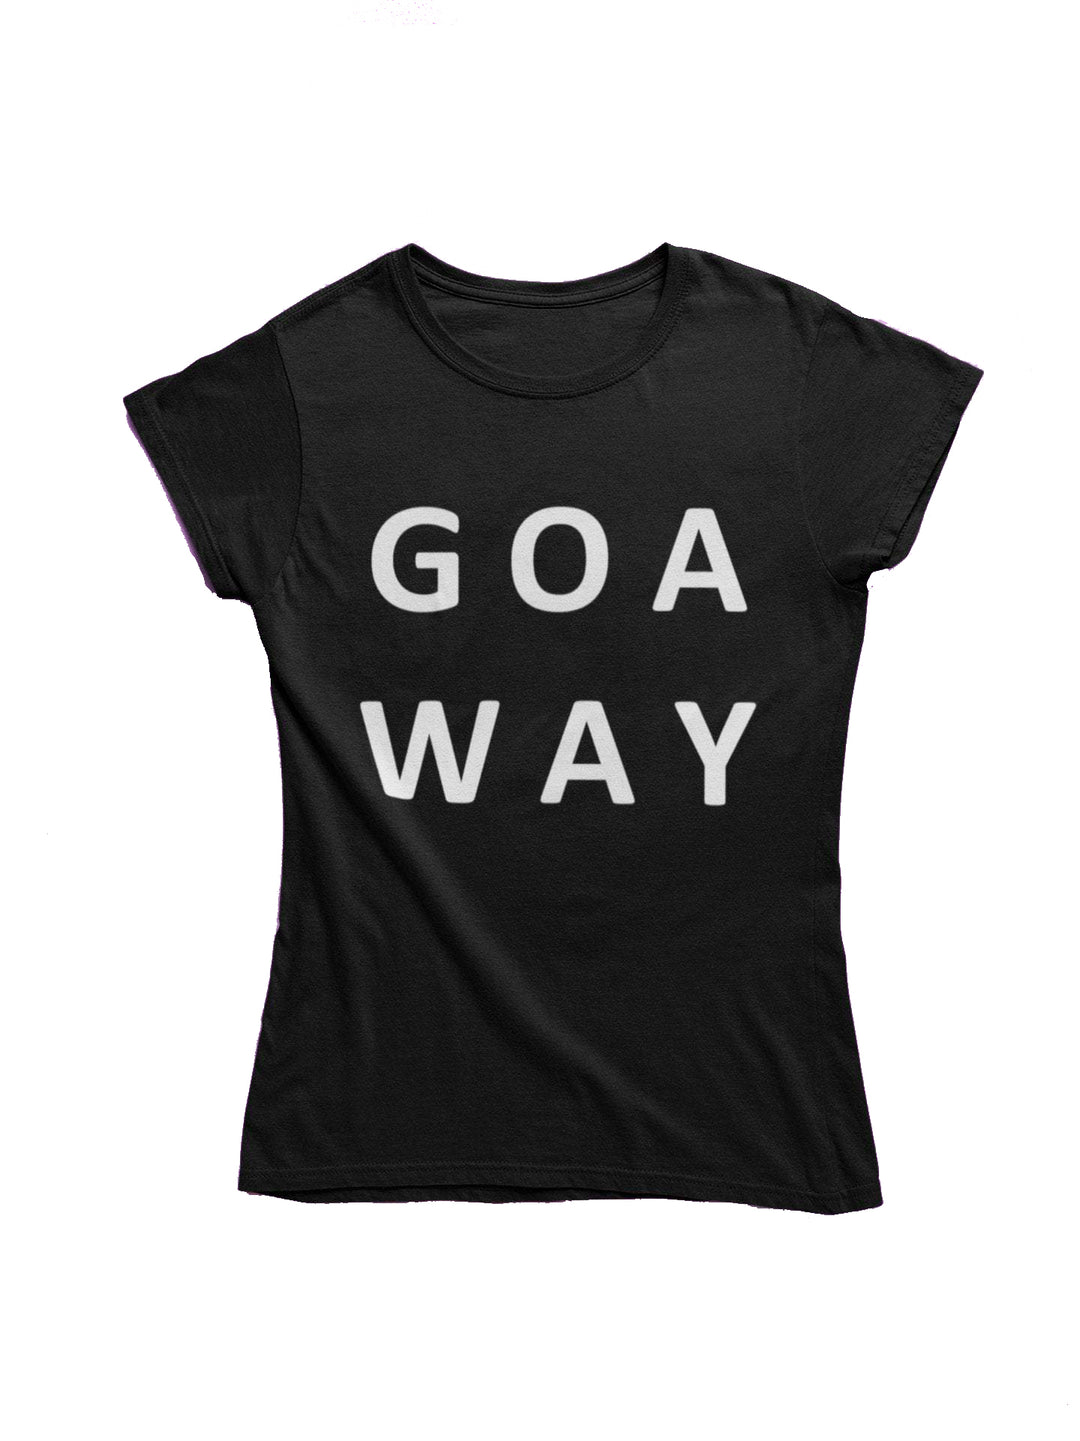 Go A Way T-Shirt - M.S.A. Custom Creations